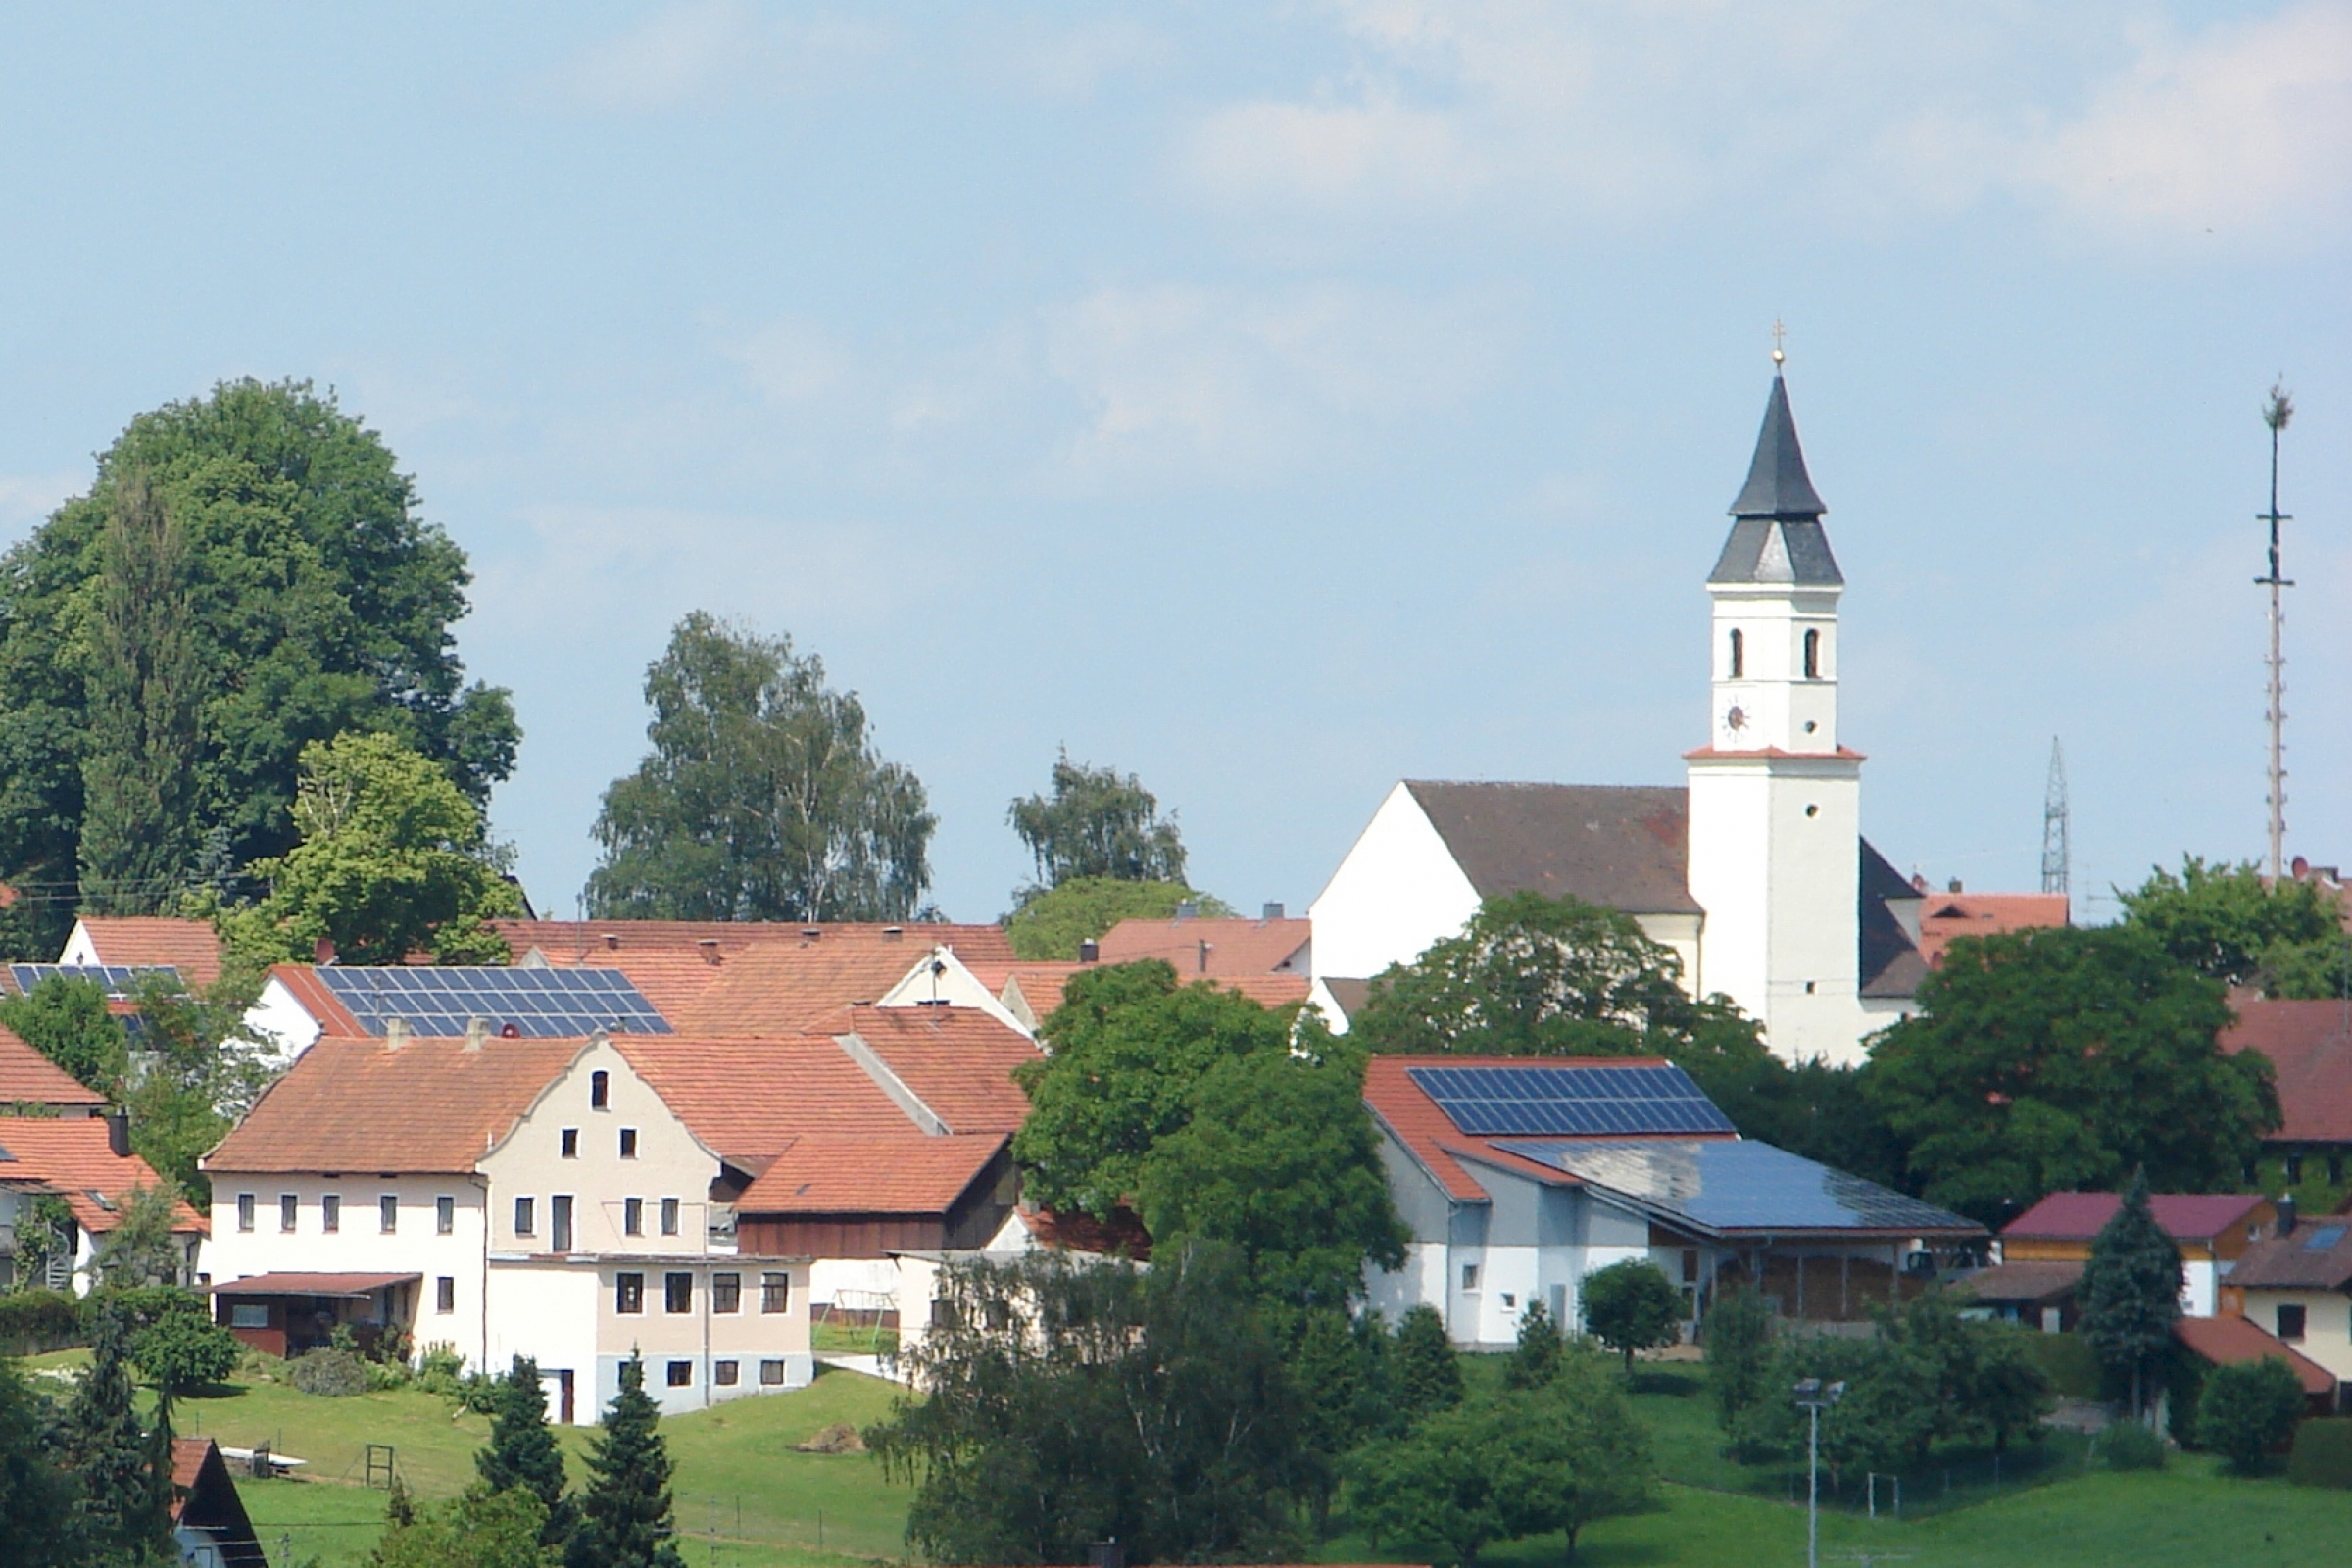 Paunzhausen